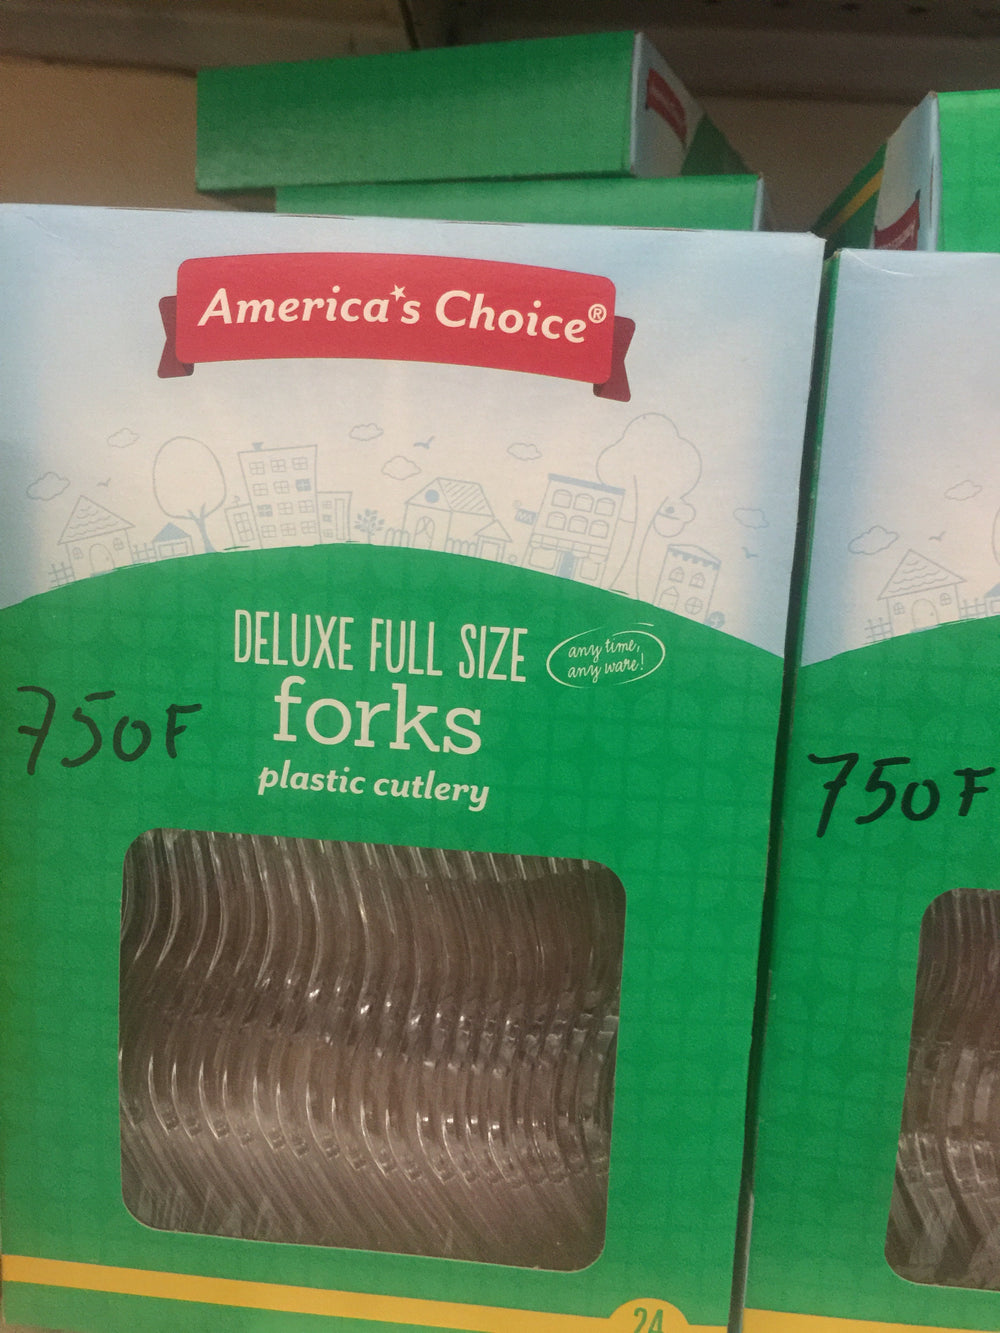 American’s Choice Plastic Forks 24Pcs